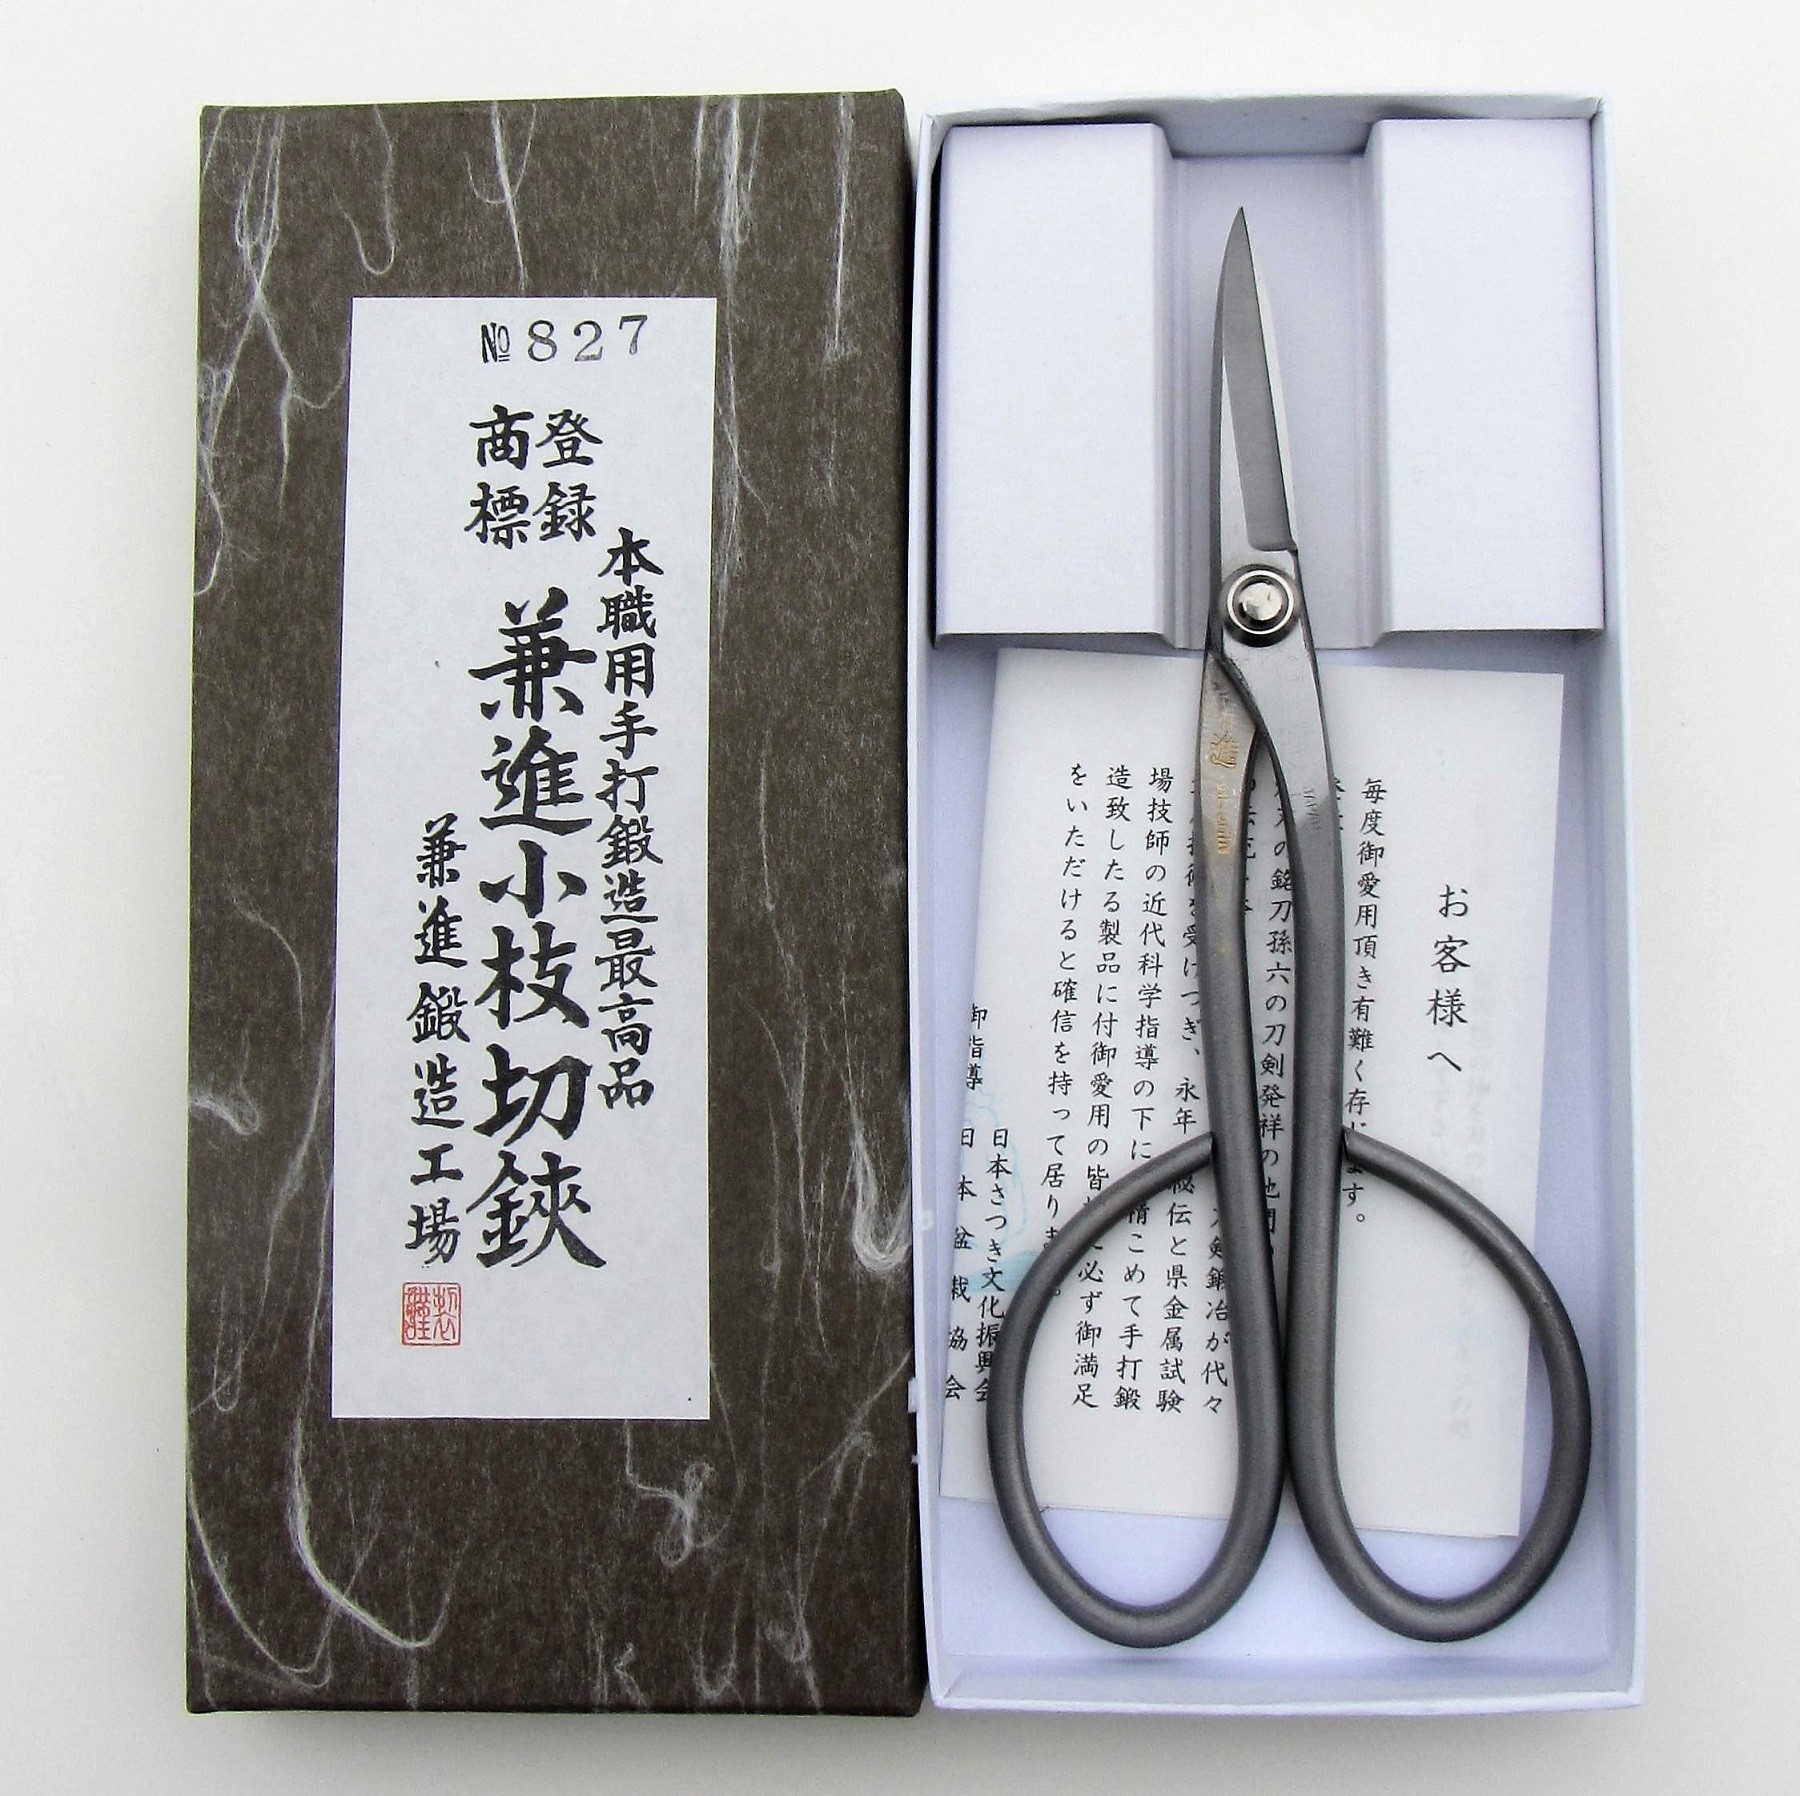 Kaneshin - ciseaux bonsai inox 180mm - Kaneshin bonsai tools